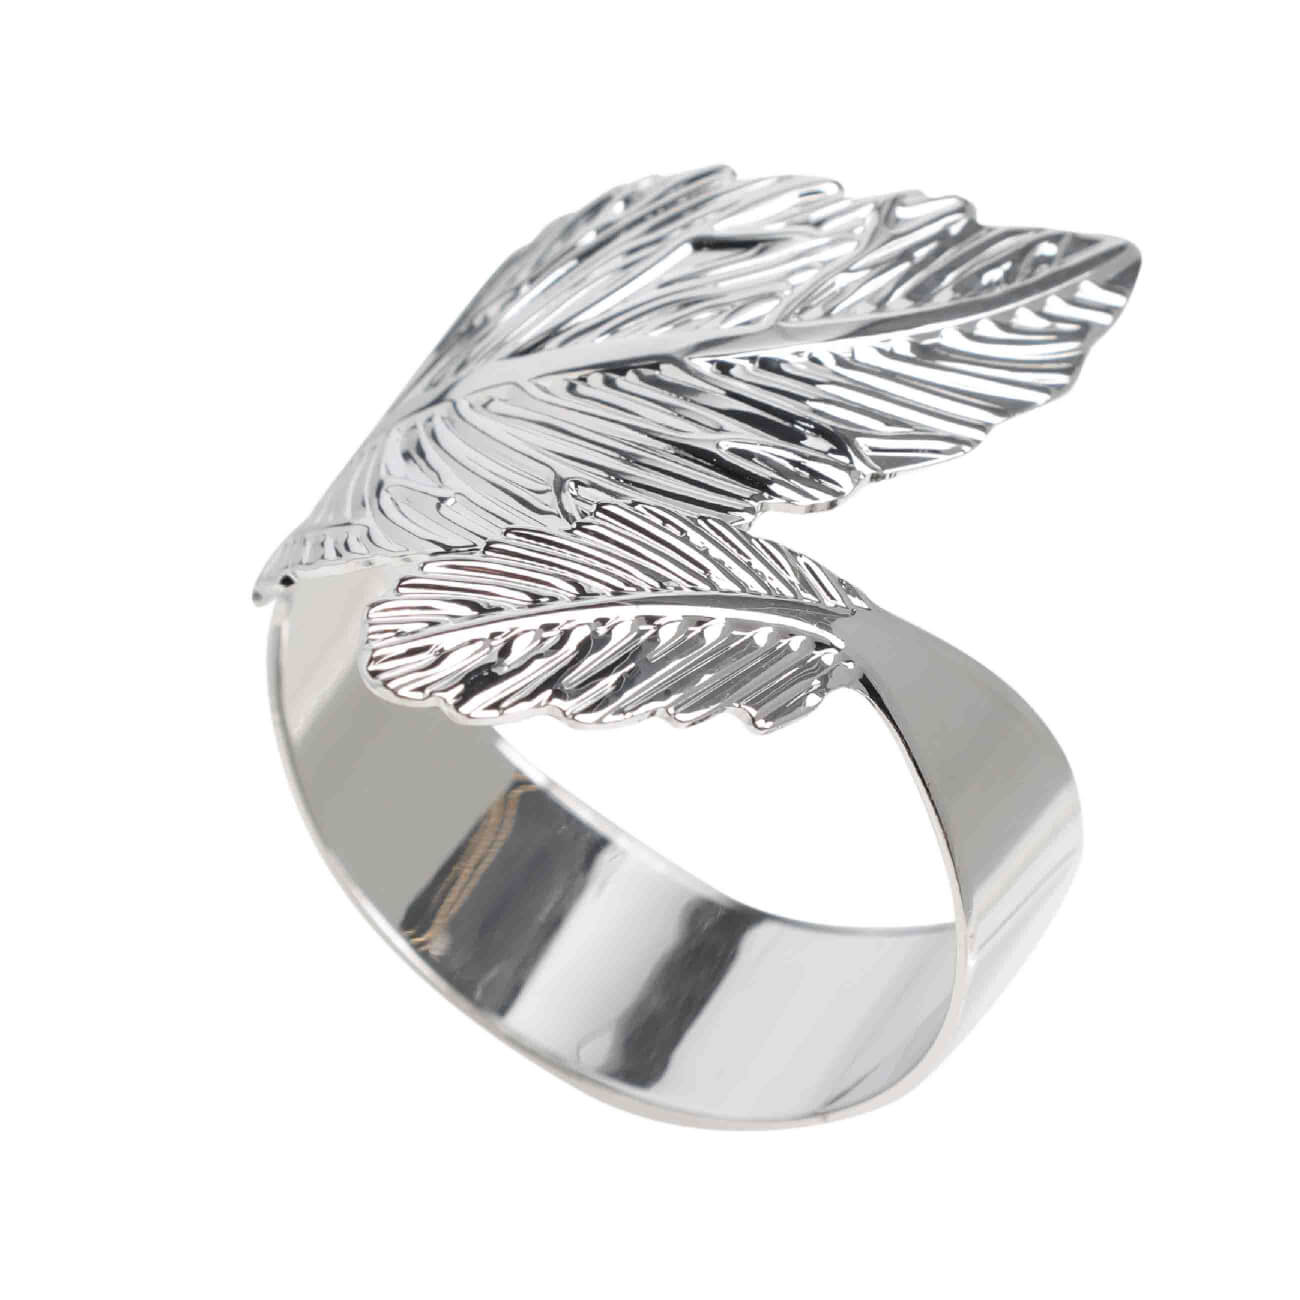 kuchenland кольцо для салфеток 5 см 2 шт металл серебристое перо feather Кольцо для салфеток, 5 см, металл, серебристое, Листья, Print